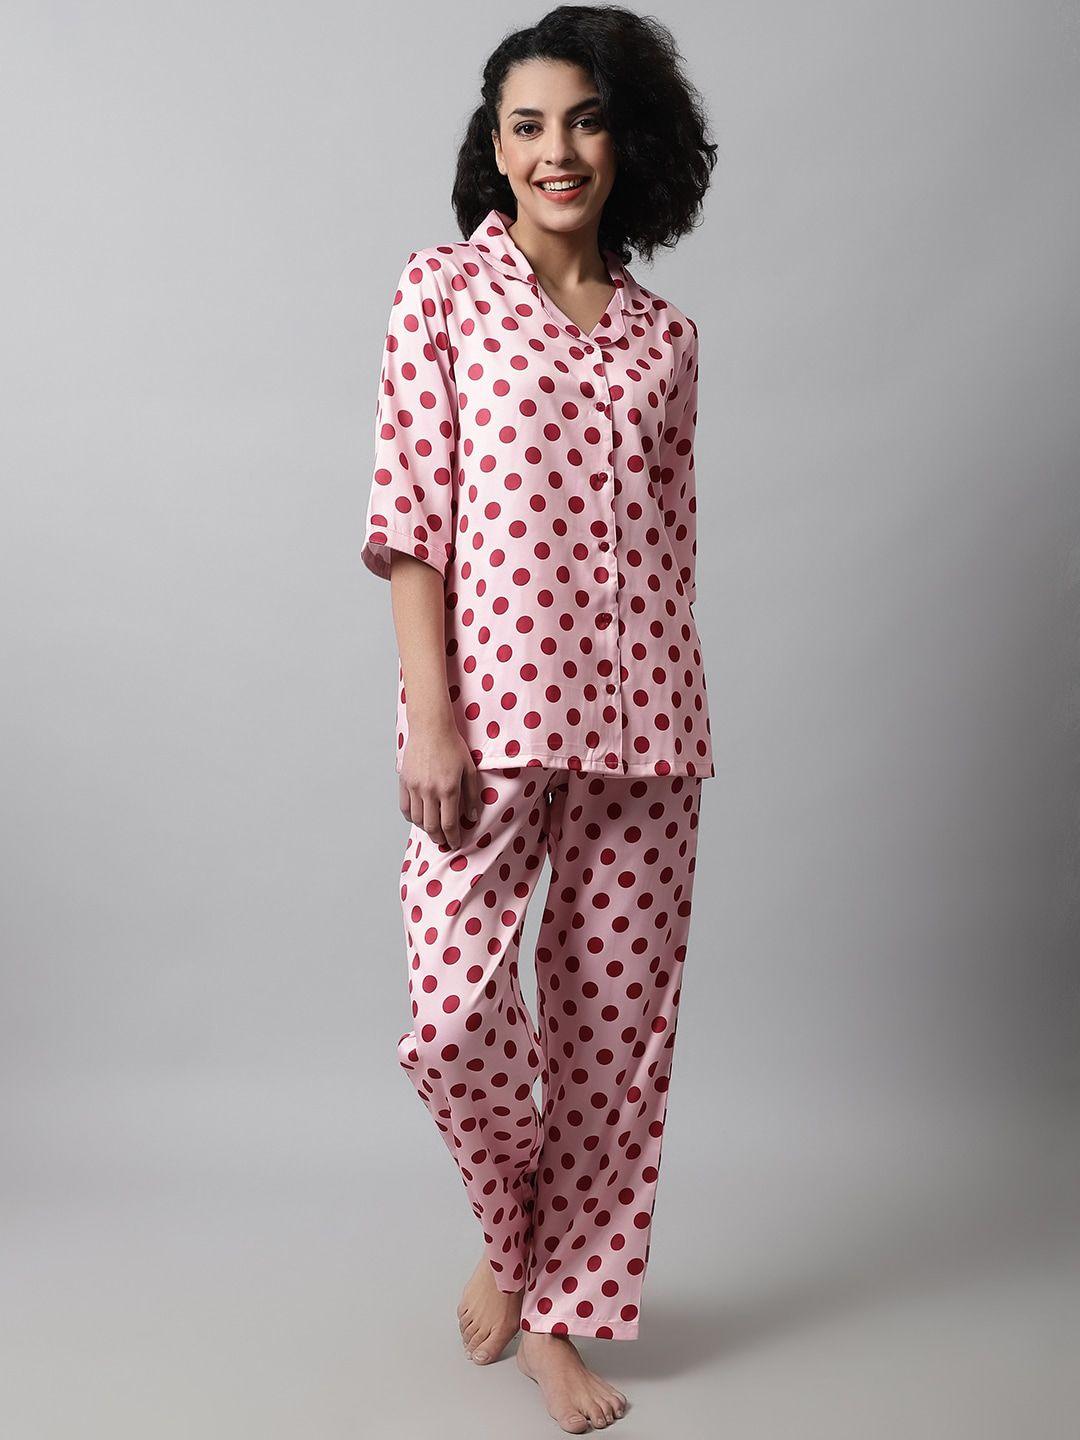 kanvin-polka-dots-printed-satin-night-suit